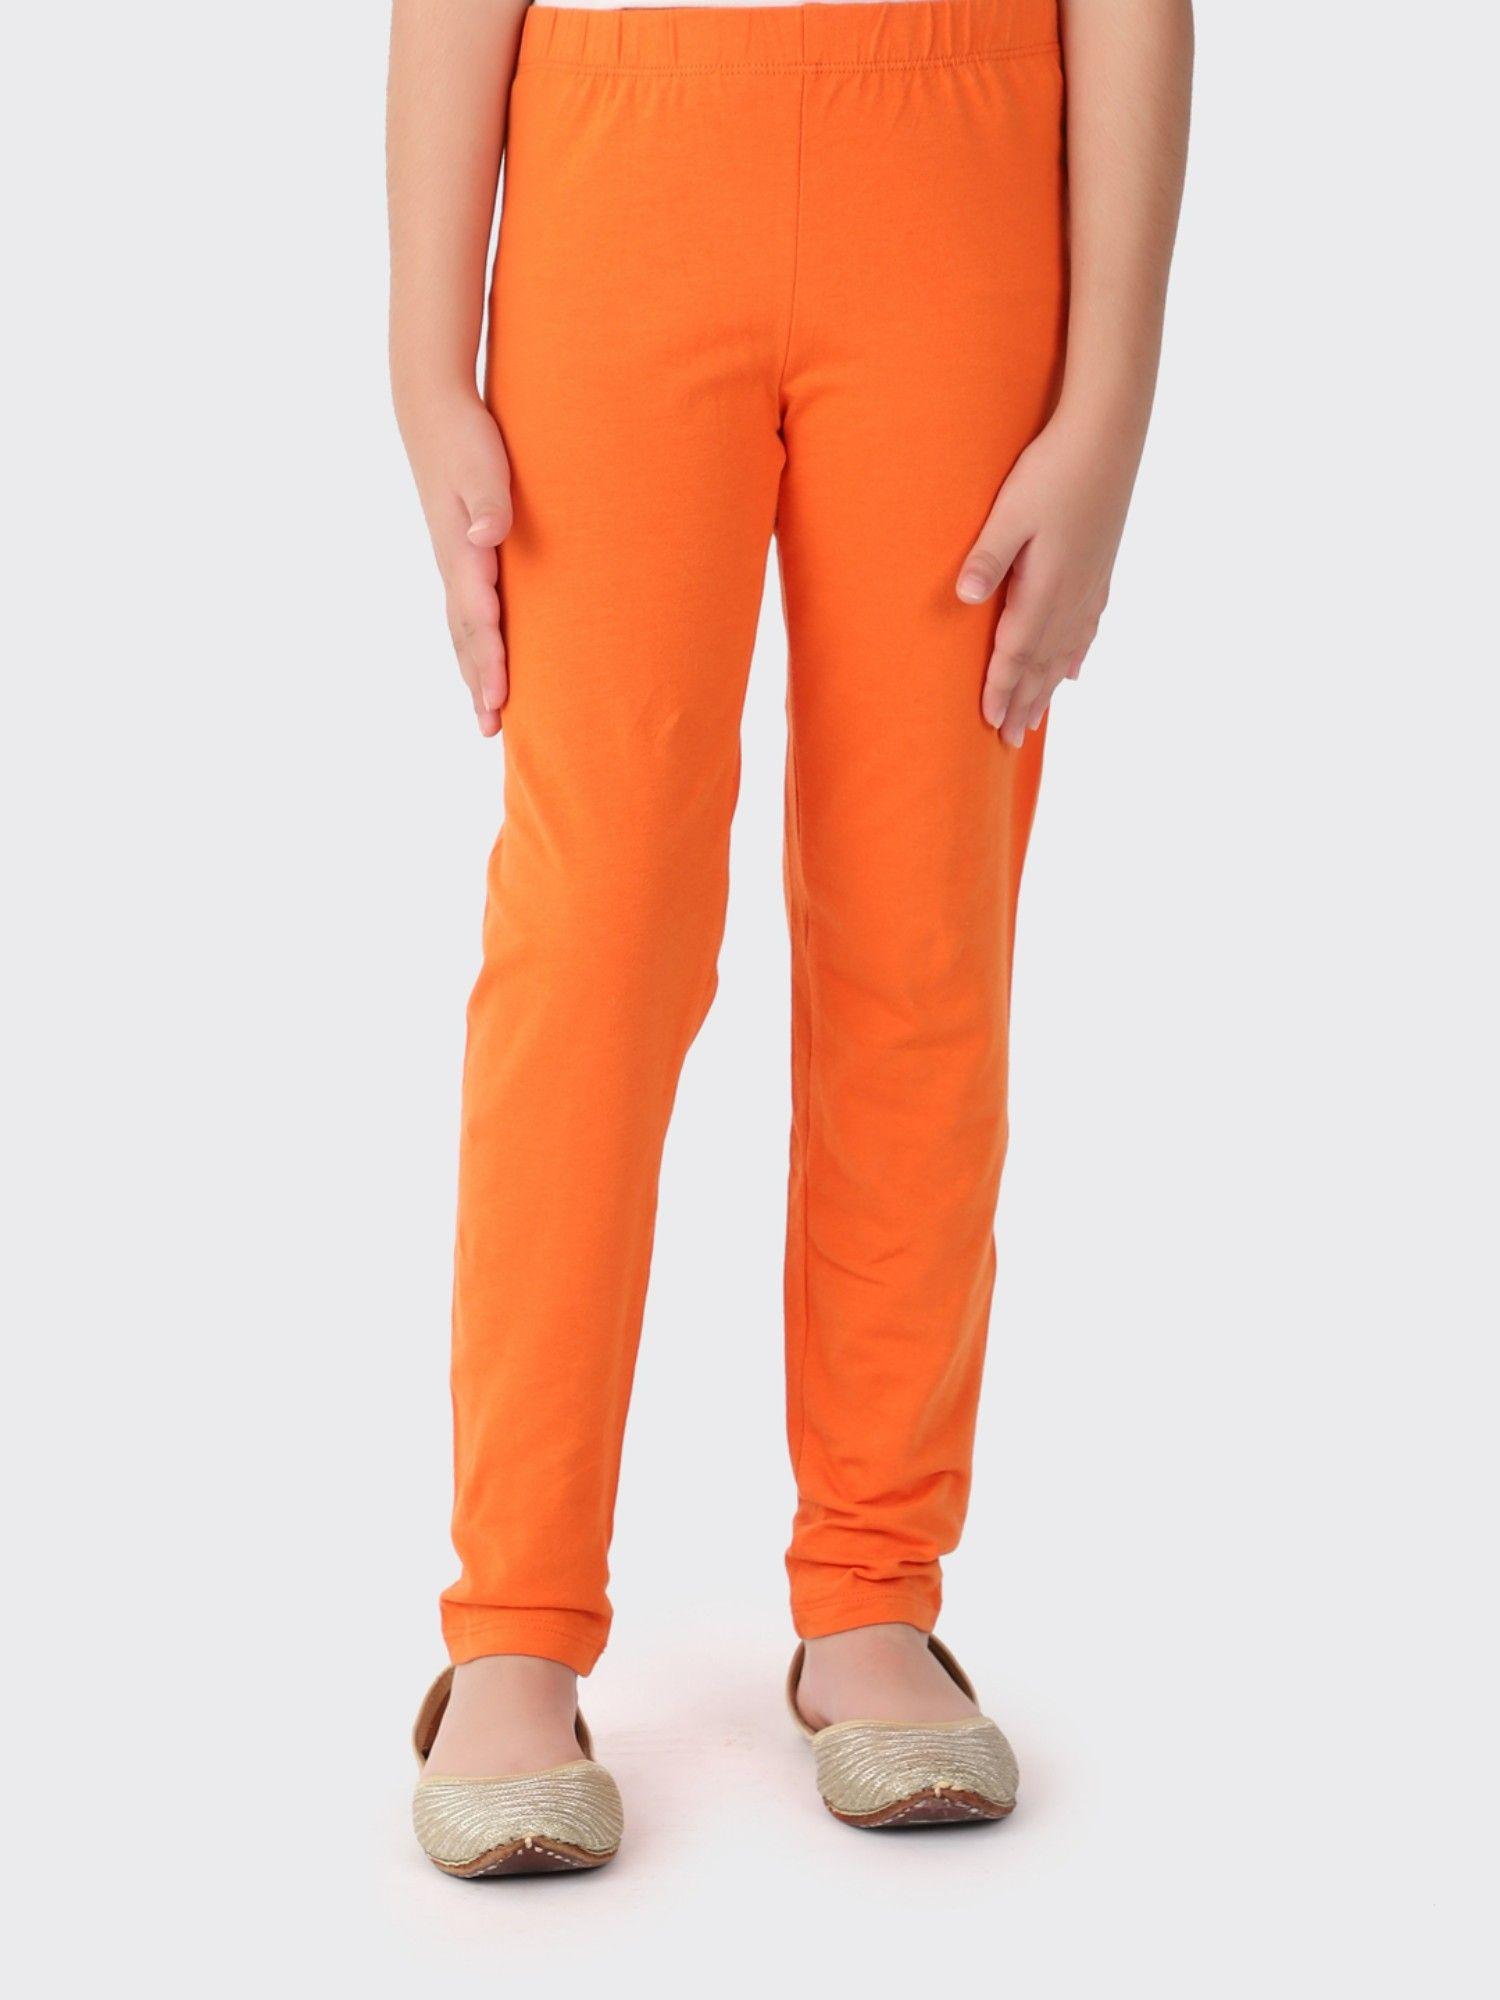 orange-cotton-blend-legging